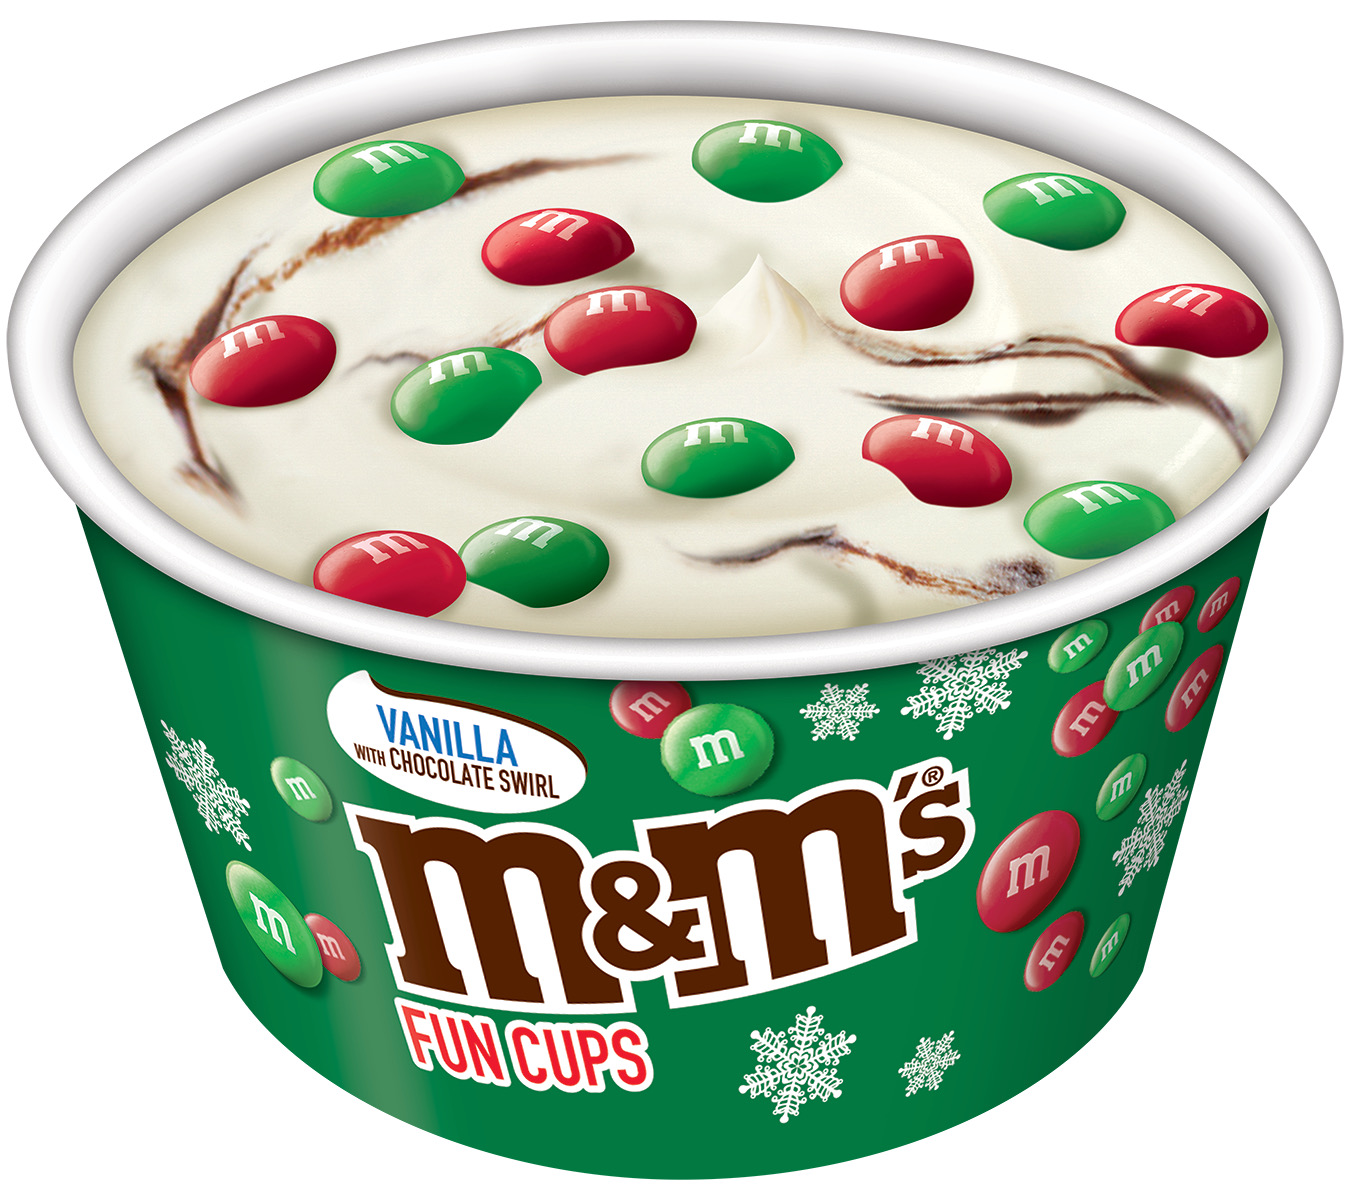 M&M's Ice Cream Fun Cups